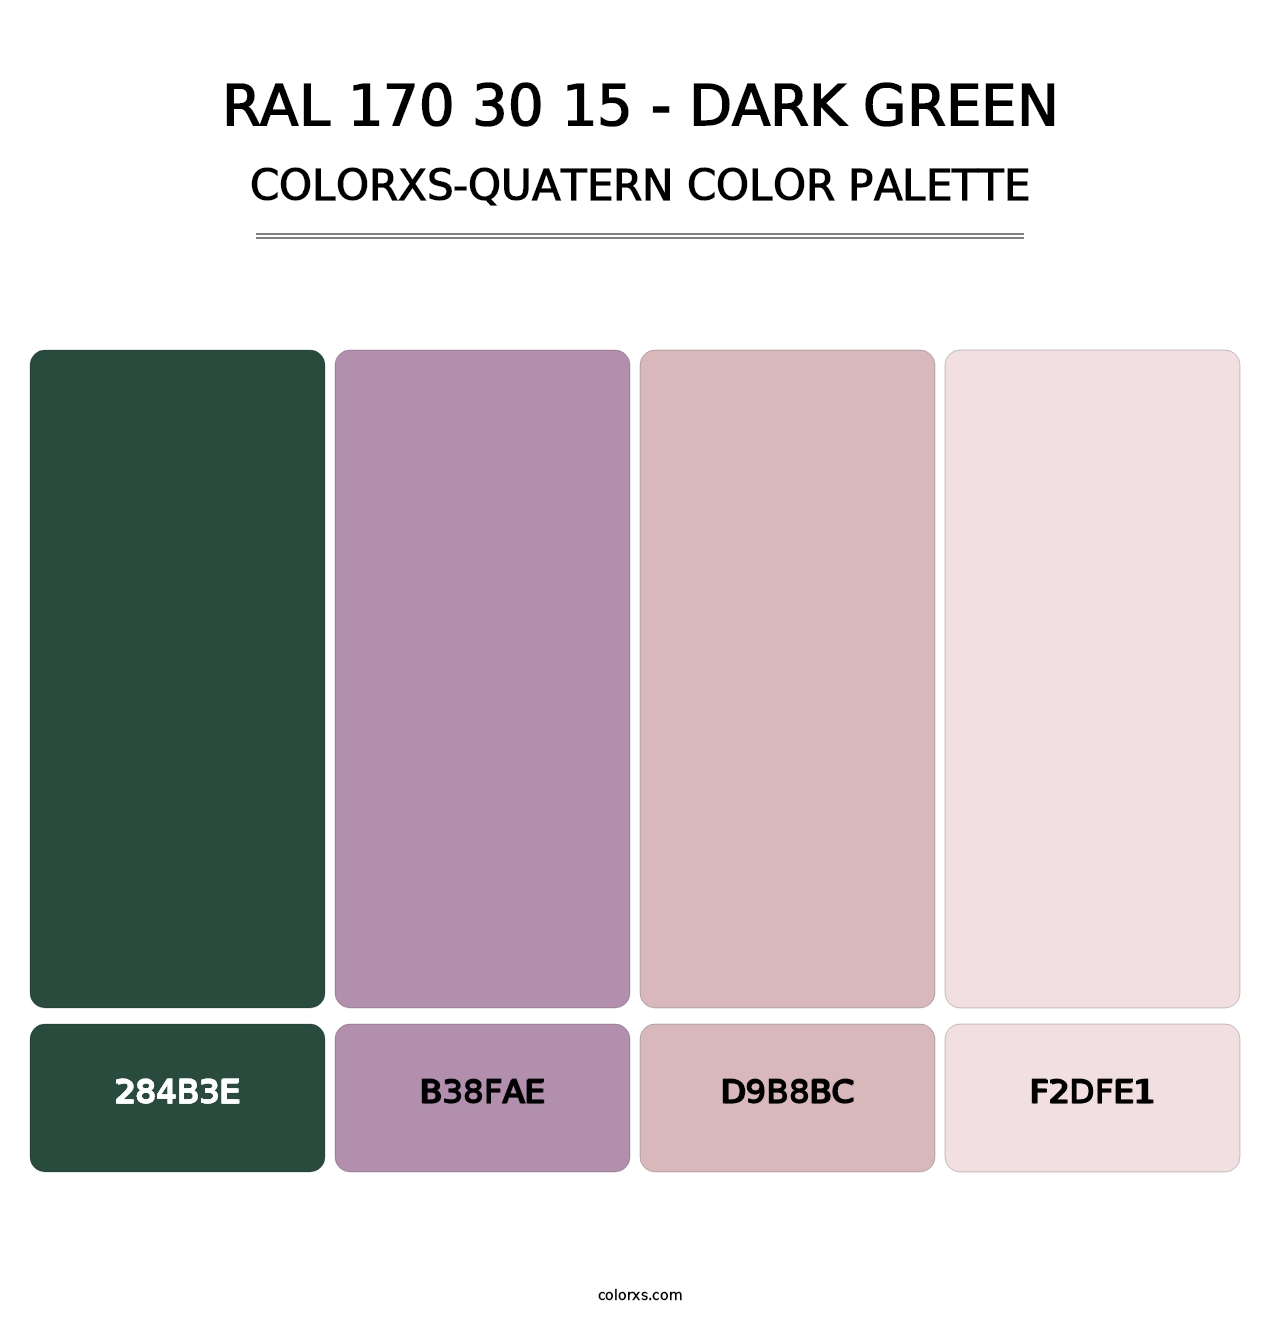 RAL 170 30 15 - Dark Green - Colorxs Quatern Palette